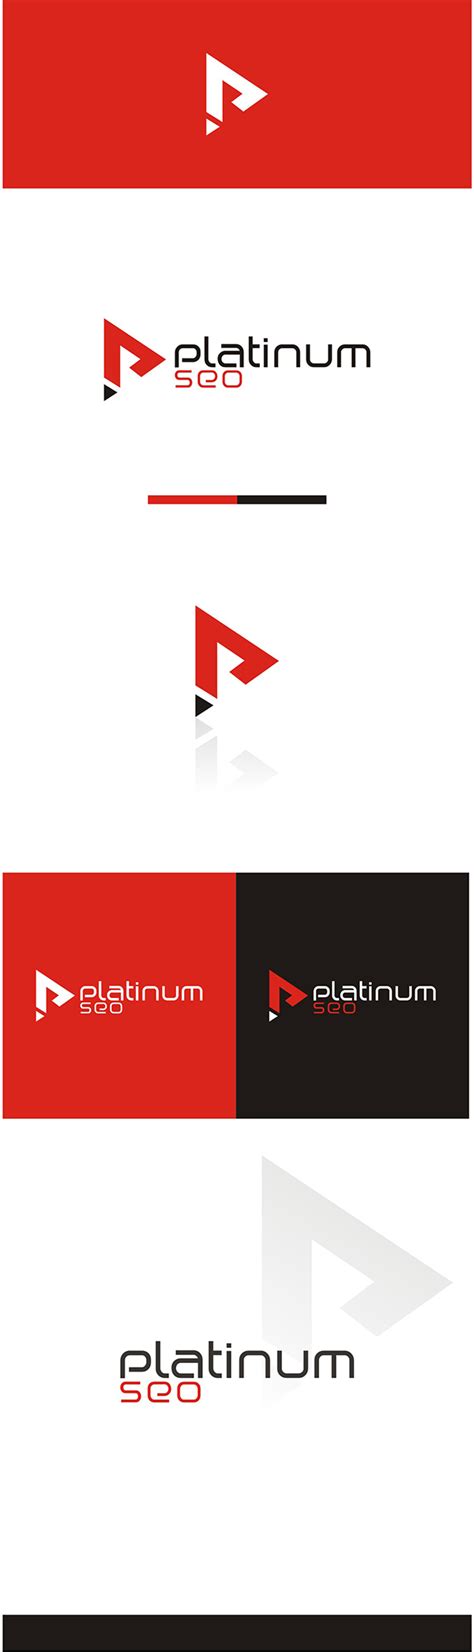 Platinum Seo on Behance